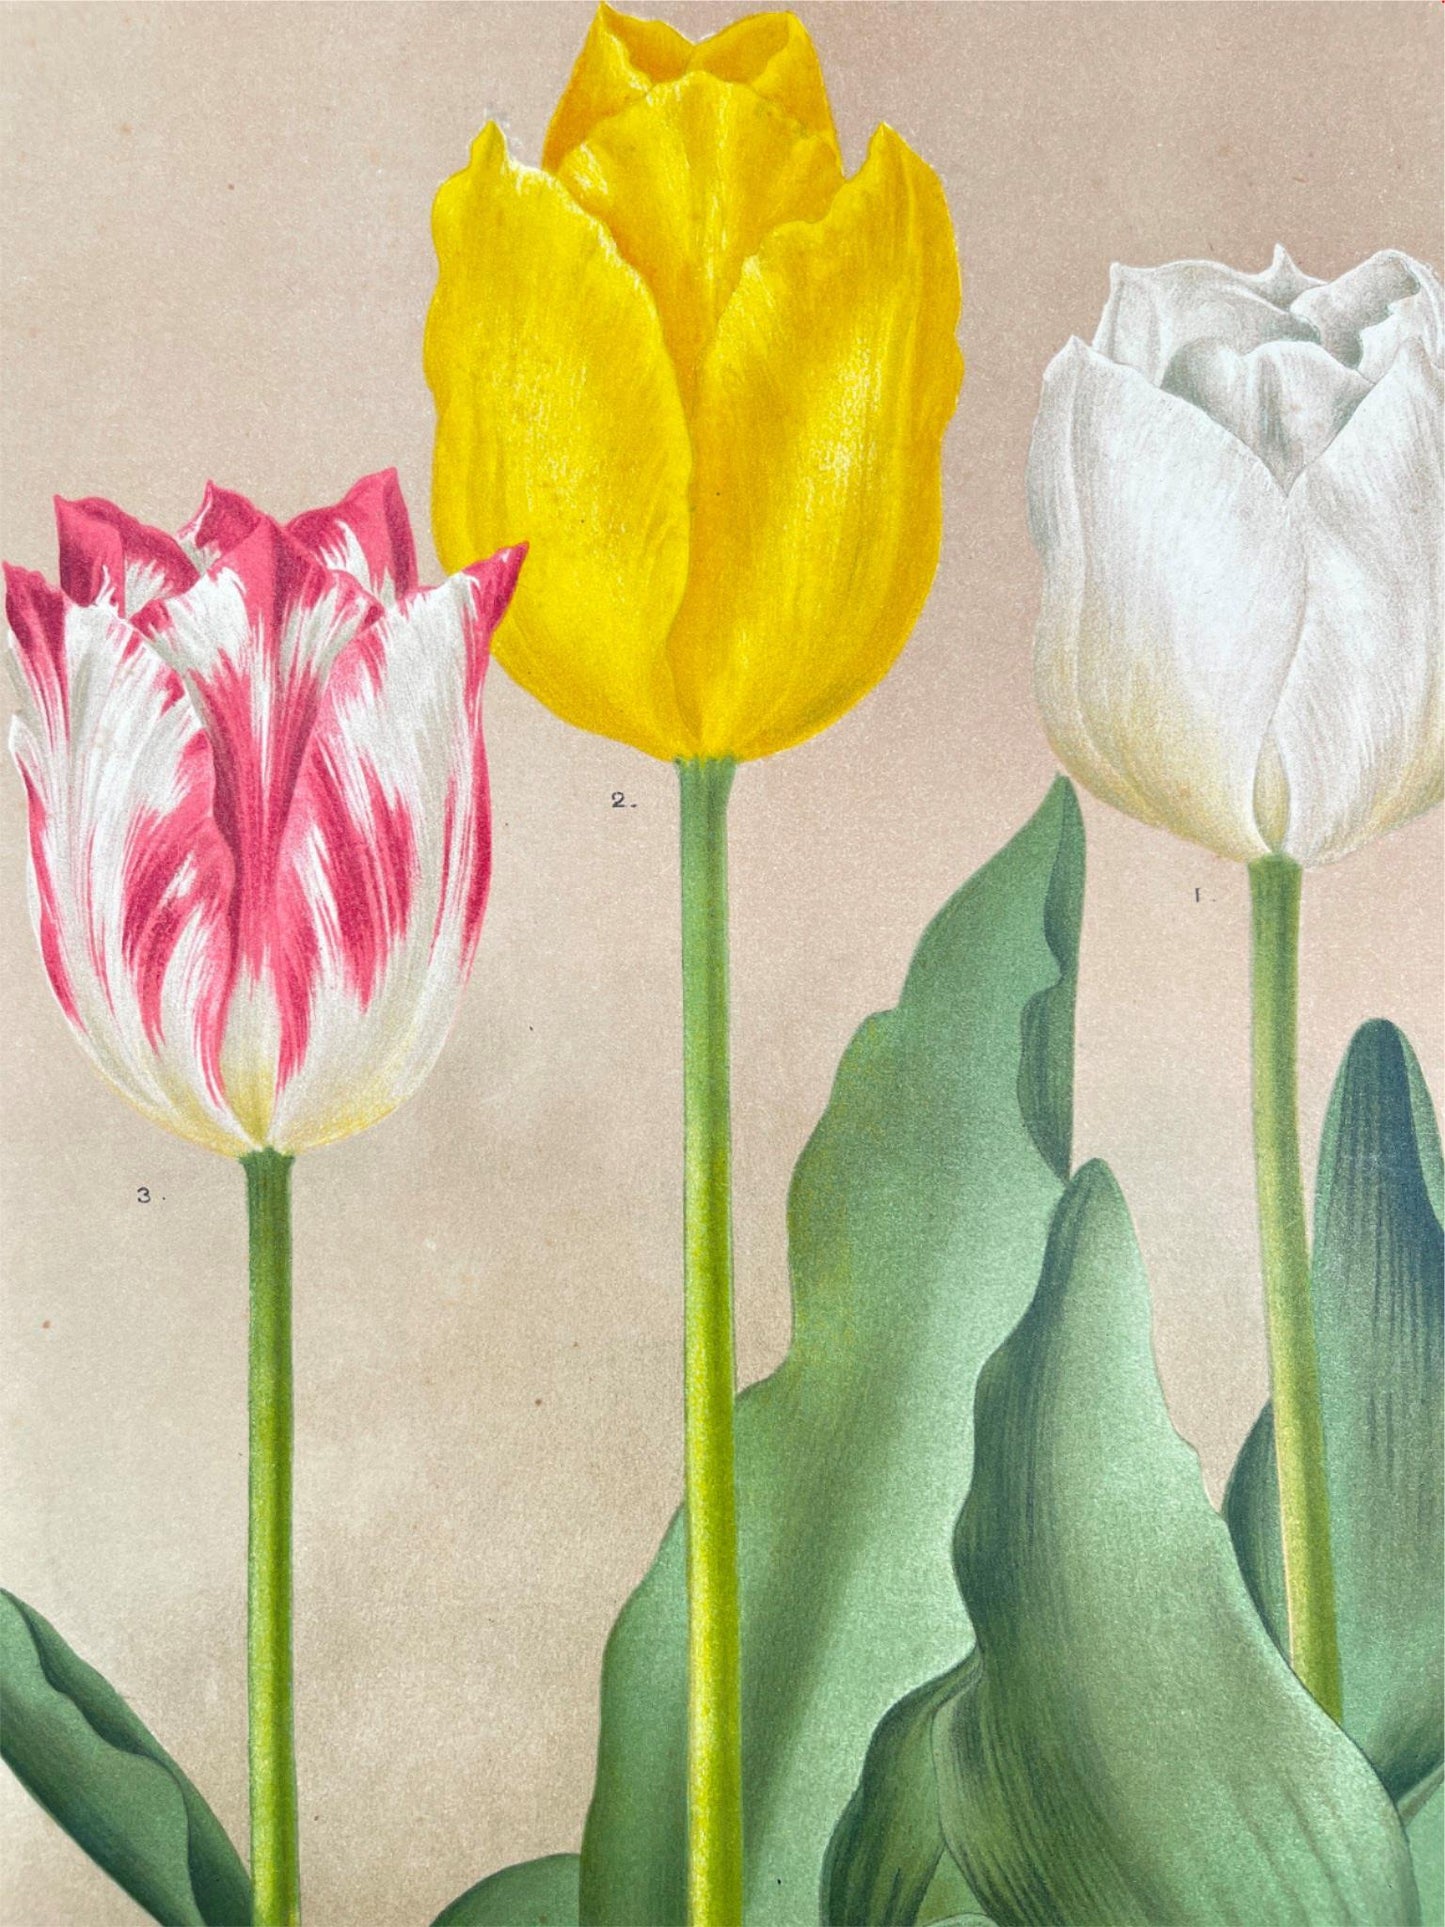 Antique Botanical Print - Flower Art - La Reine - Goffart & Severeijn - Dahlströms Fine Art